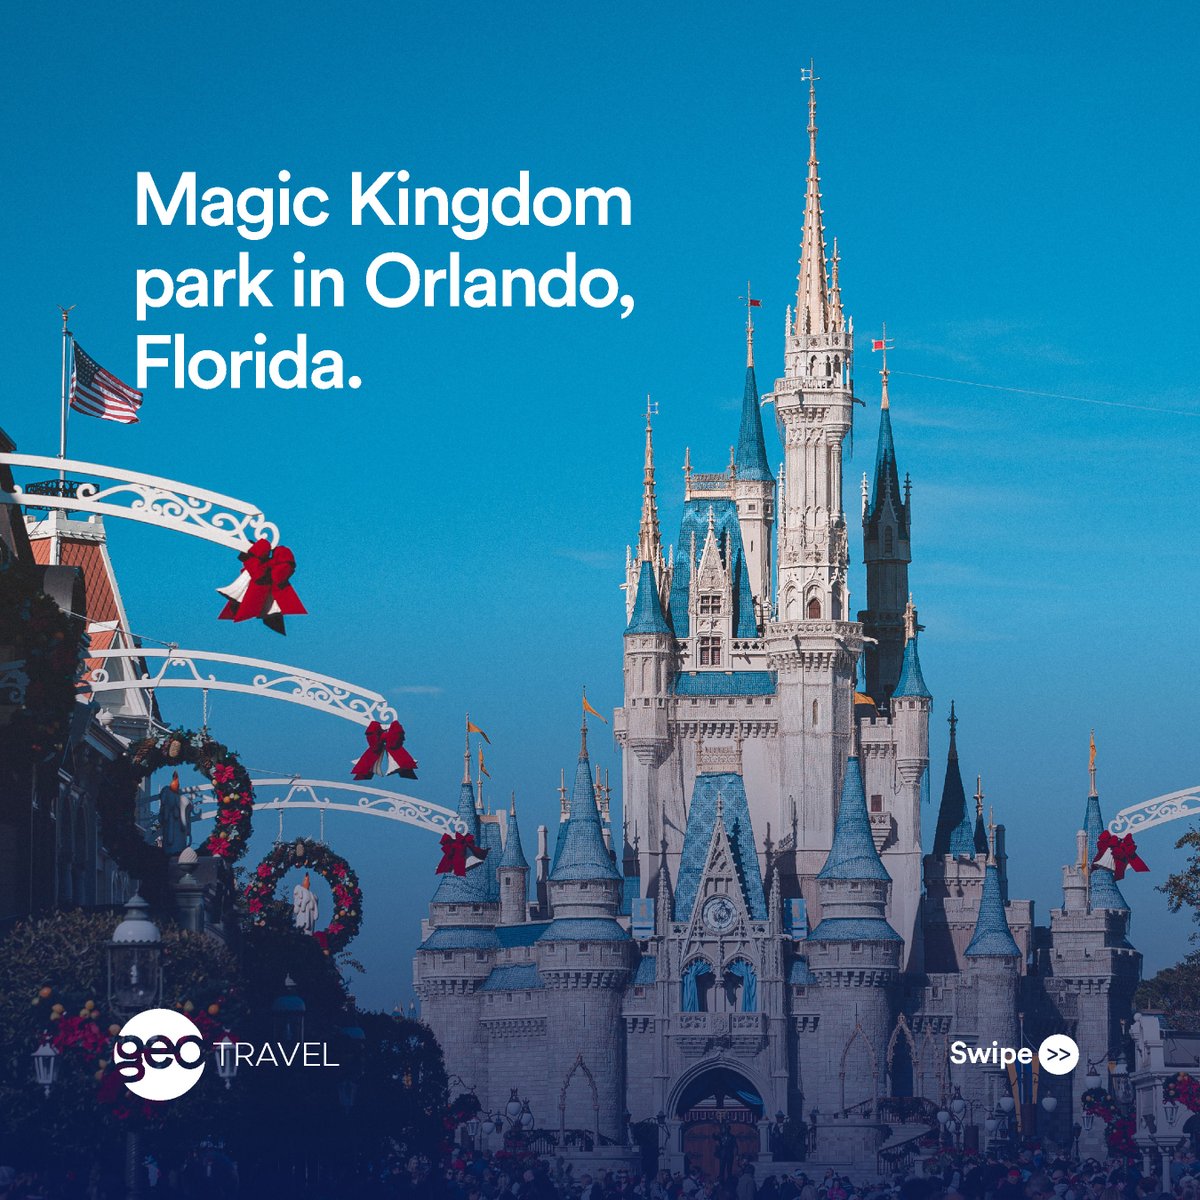 The Top 4 Disney Destinations in the World. ✨🏰

 - Magic Kingdom Park in Orlando, Florida ✨
- Tokyo Disneyland in Japan 🇯🇵
- Disneyland Paris in France 🌍
- Hong Kong Disneyland in China 🏯

Follow for more!

#DisneyLand #TravelGoals #BucketListAdventures  #travelguides